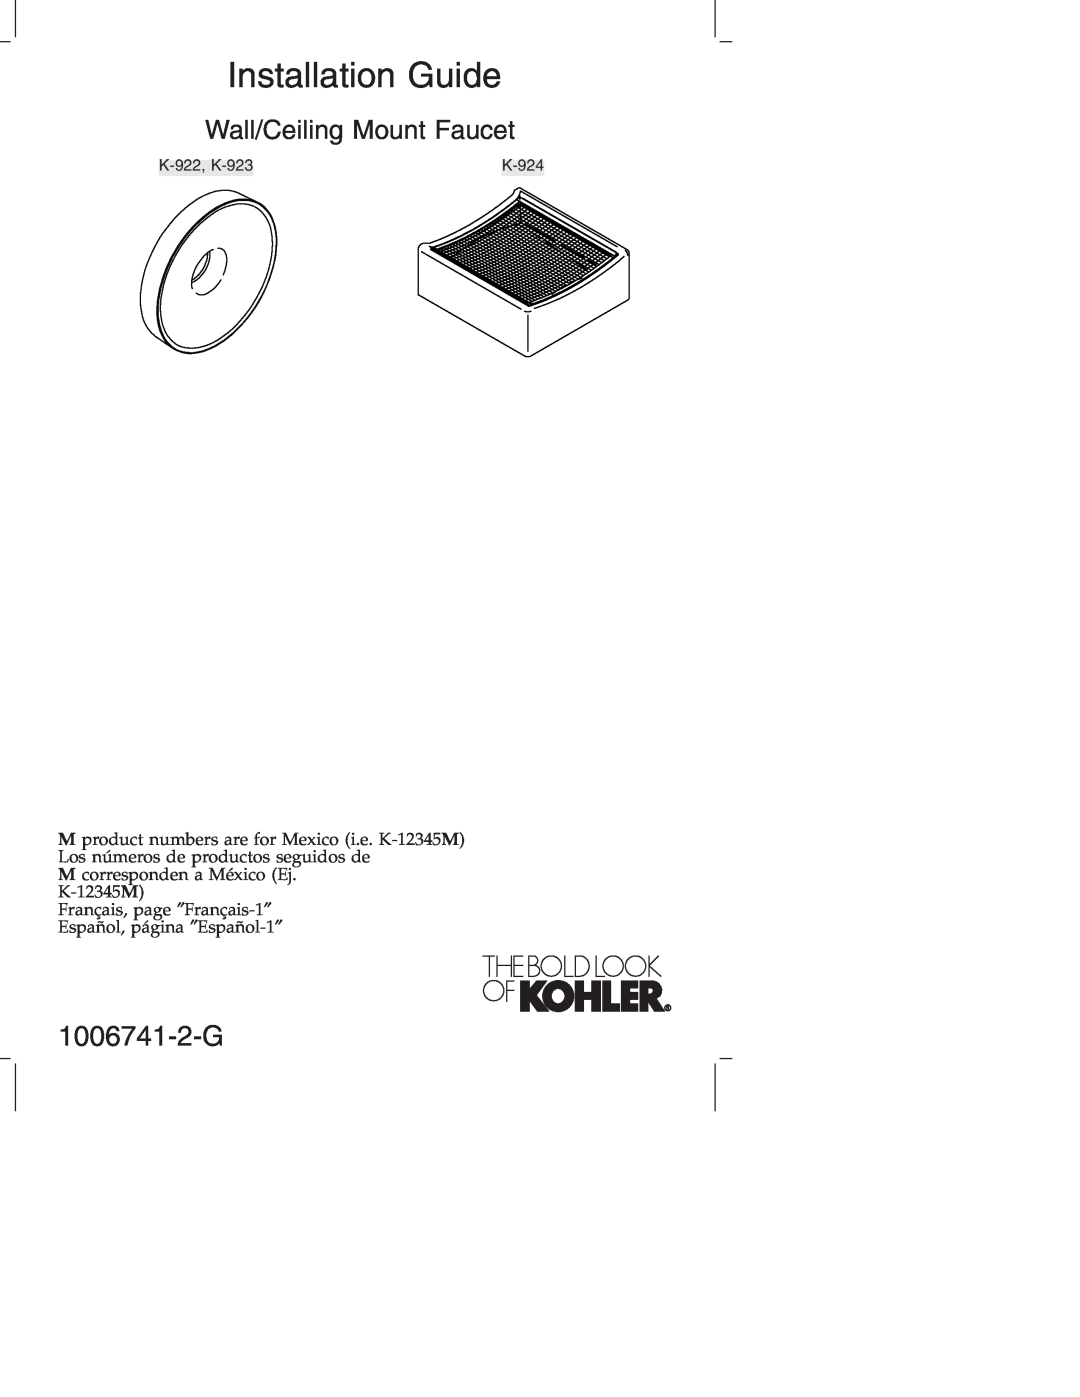 Kohler K-922/K-923 manual 1006741-2-G, Installation Guide, Wall/Ceiling Mount Faucet, K-922, K-923, K-924 